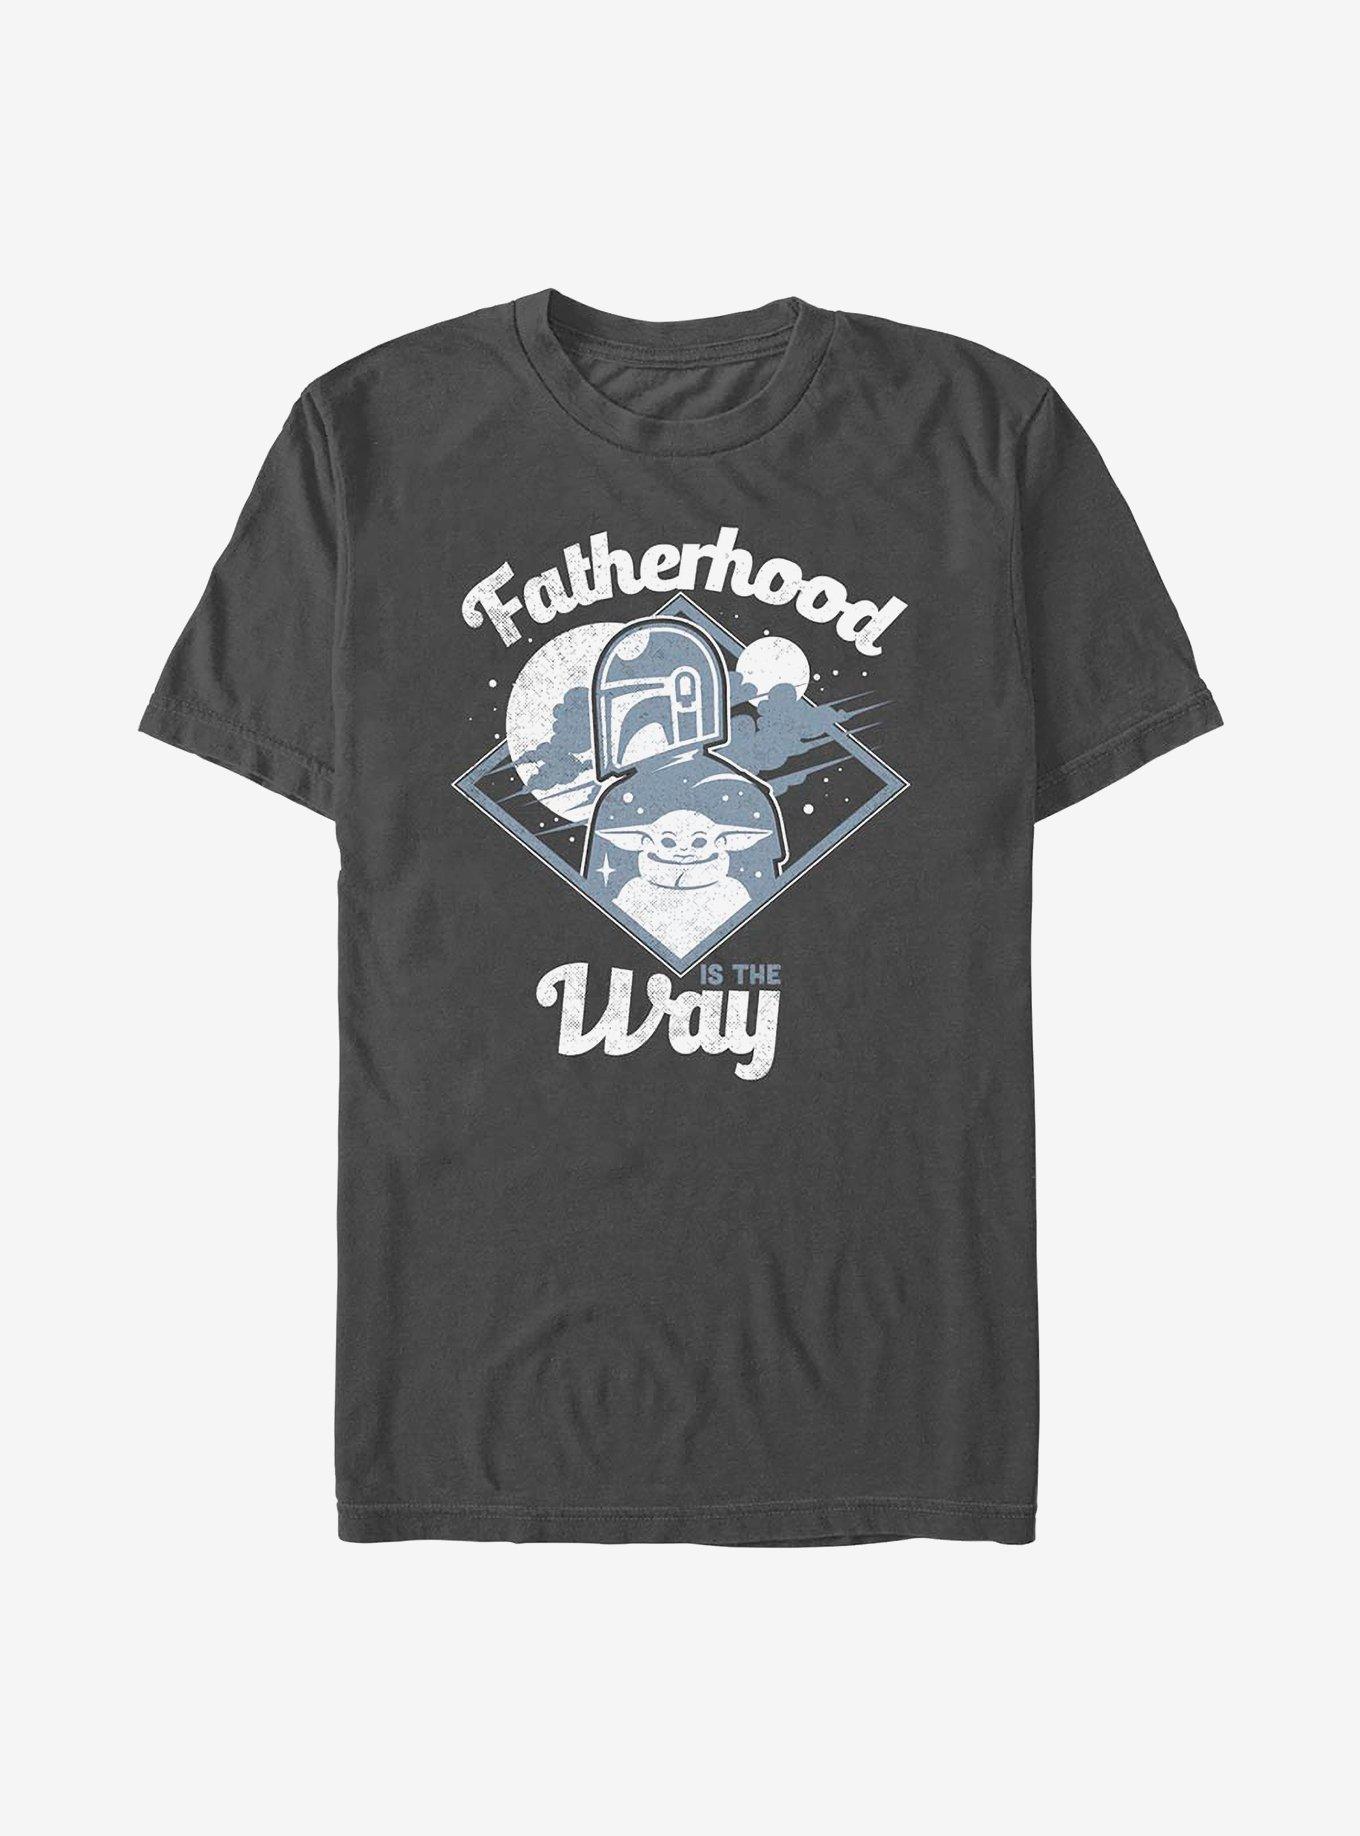 Star Wars The Mandalorian Fatherhood Is Way T-Shirt